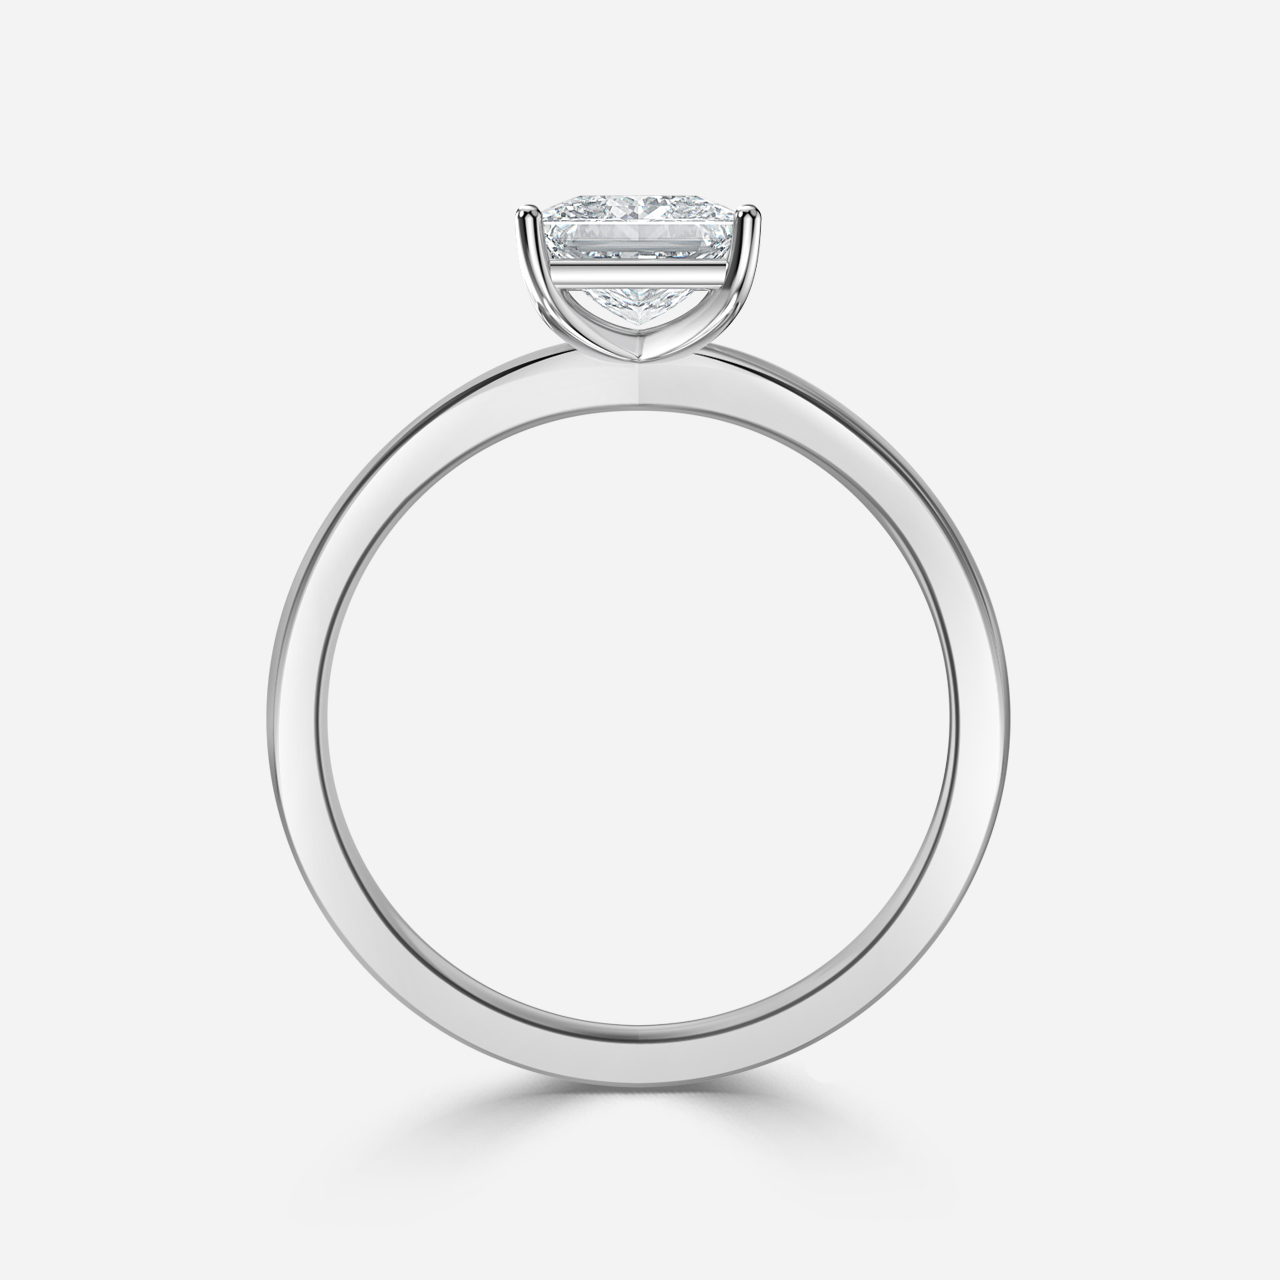 Ella White Gold Engagement Ring